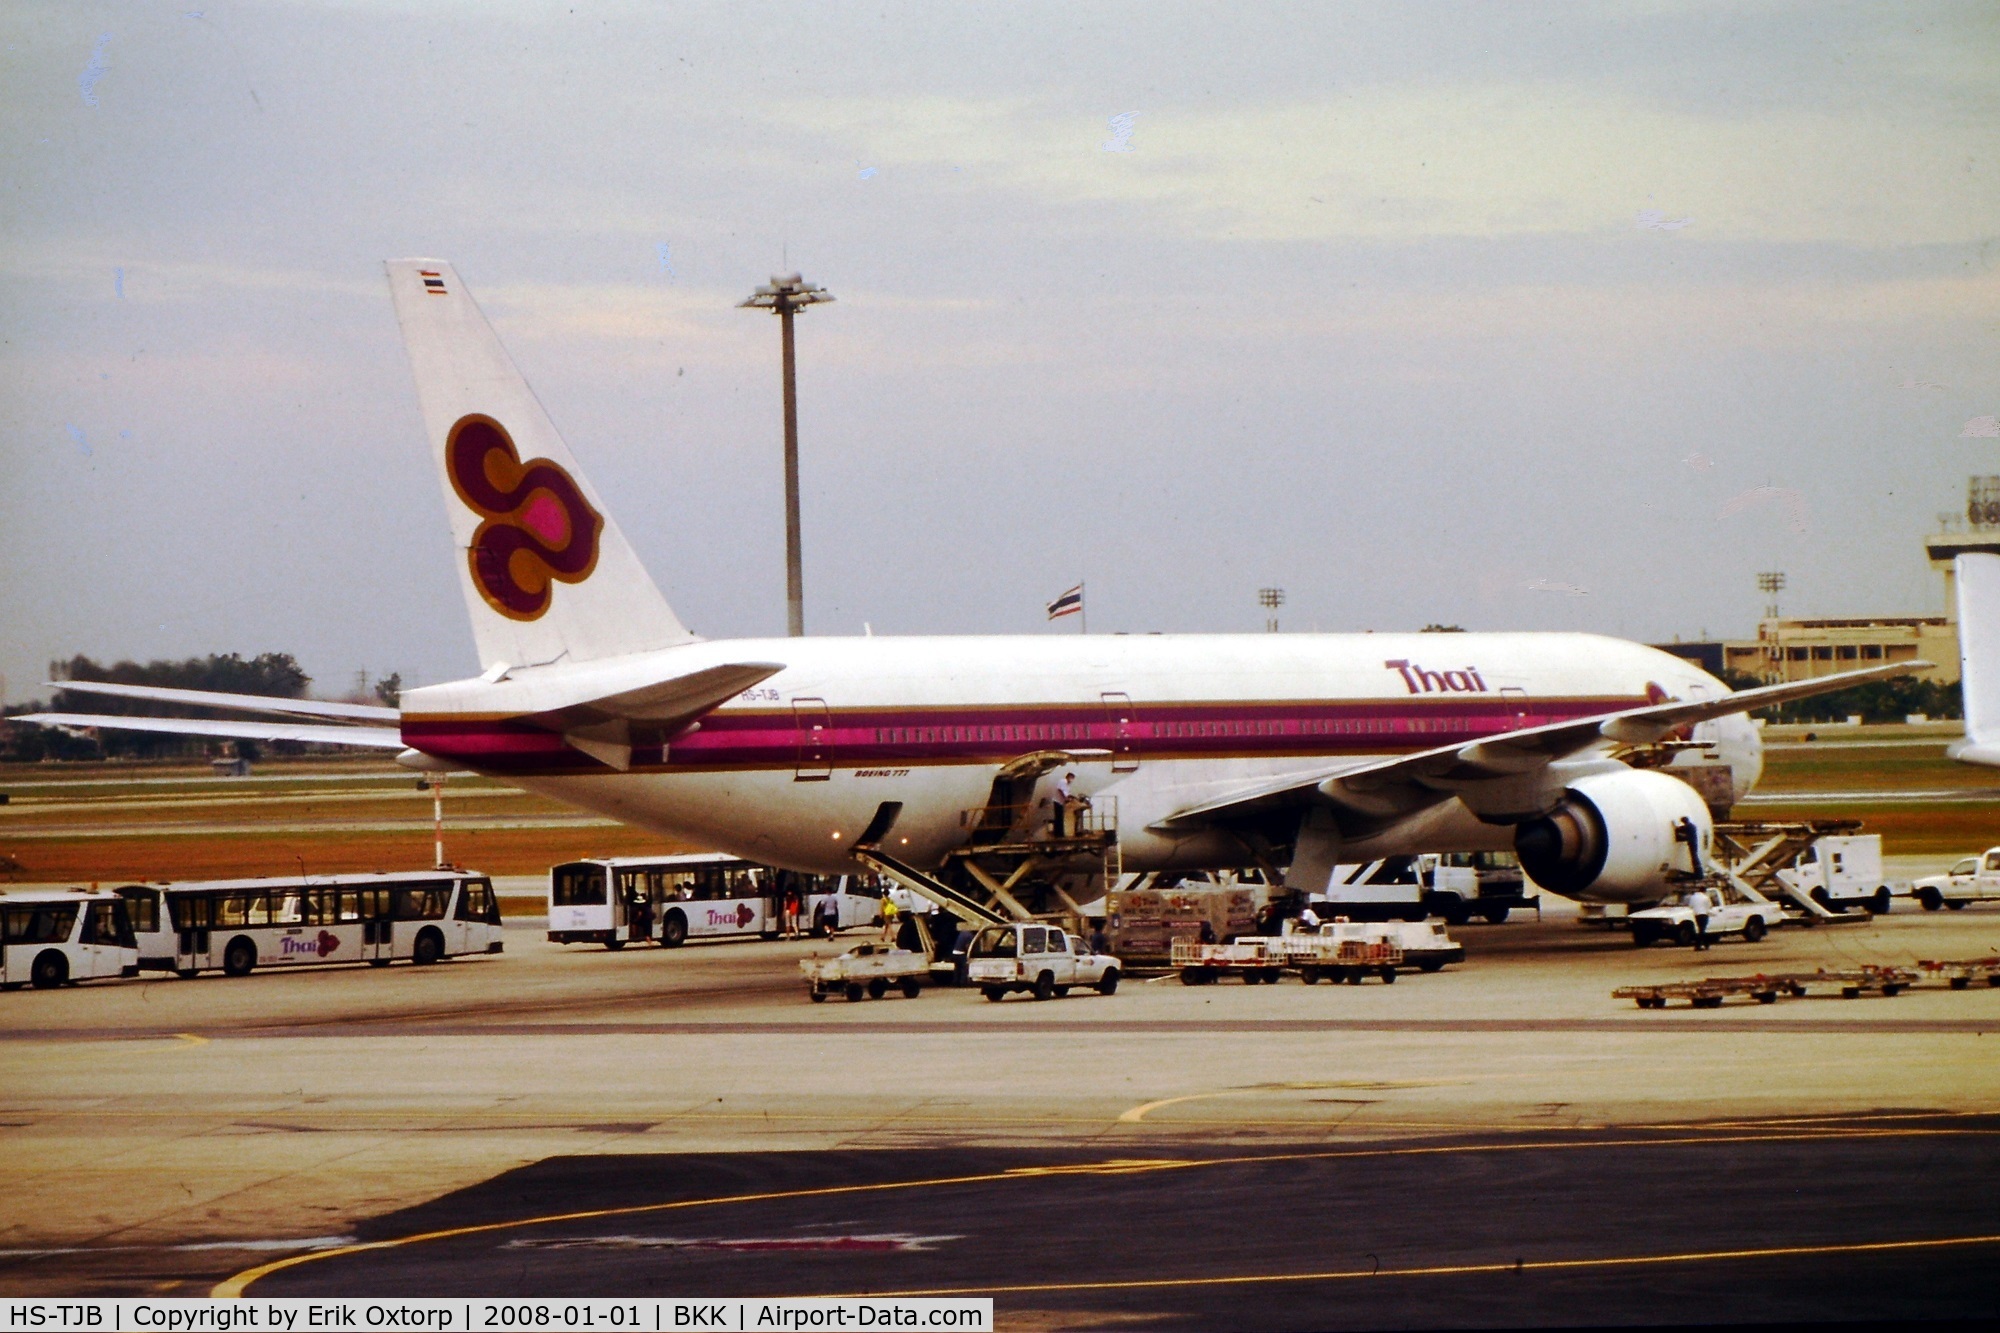 HS-TJB, 1996 Boeing 777-2D7 C/N 27727, HS-TJB in BKK (Don Muang) JUL97